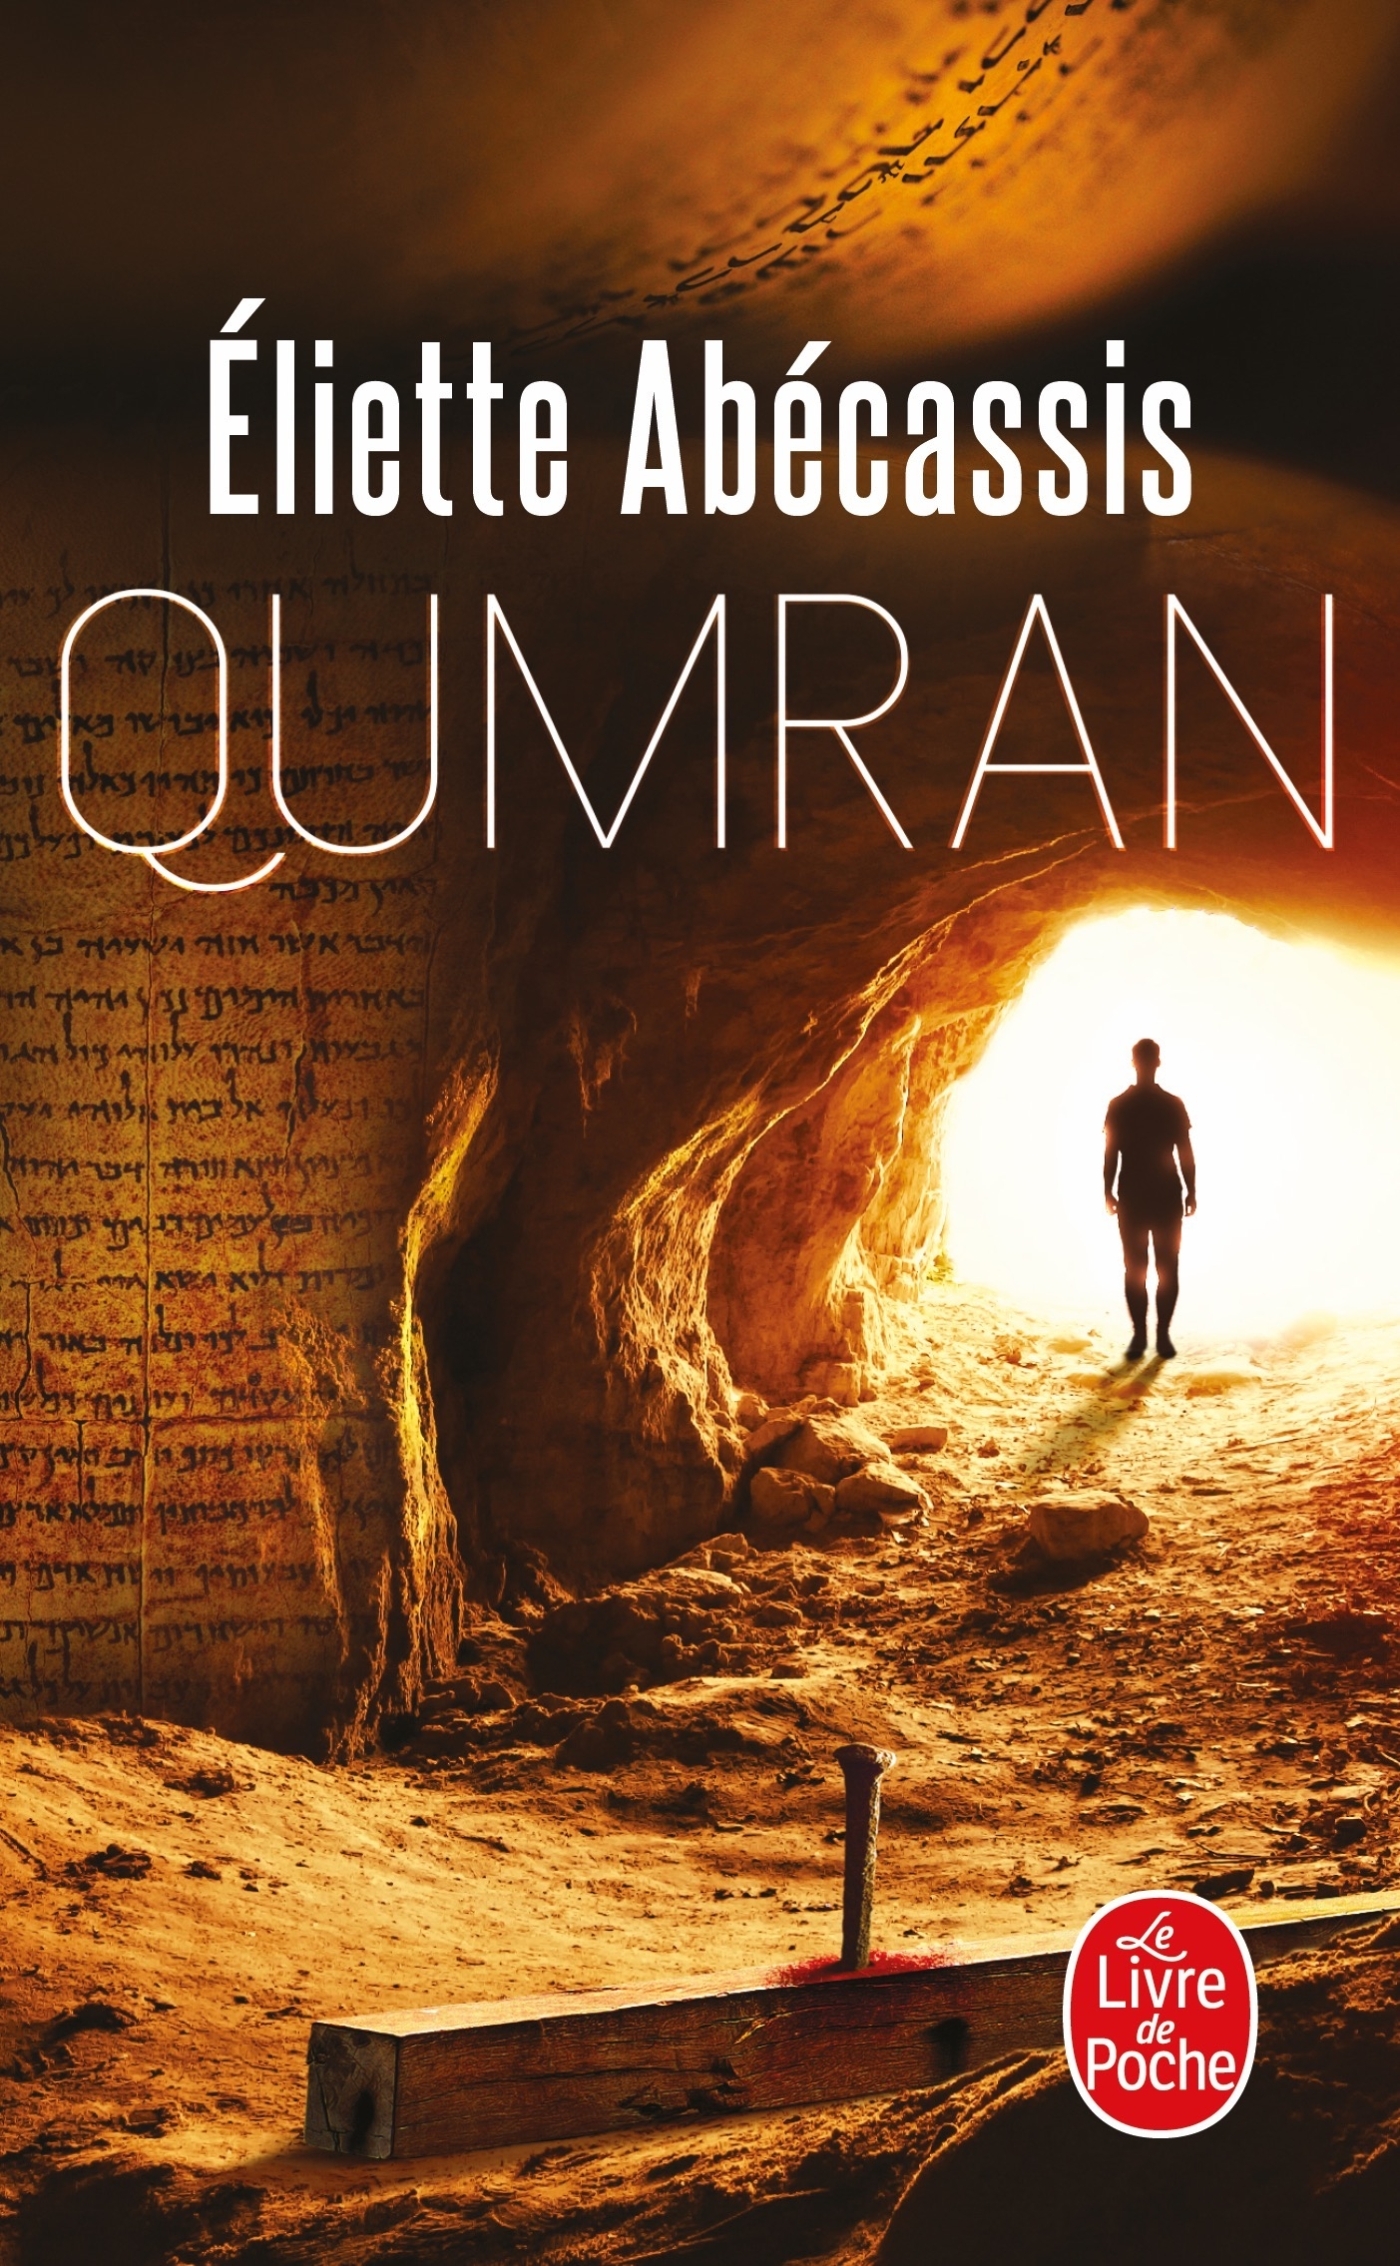 Qumran (9782253143635-front-cover)